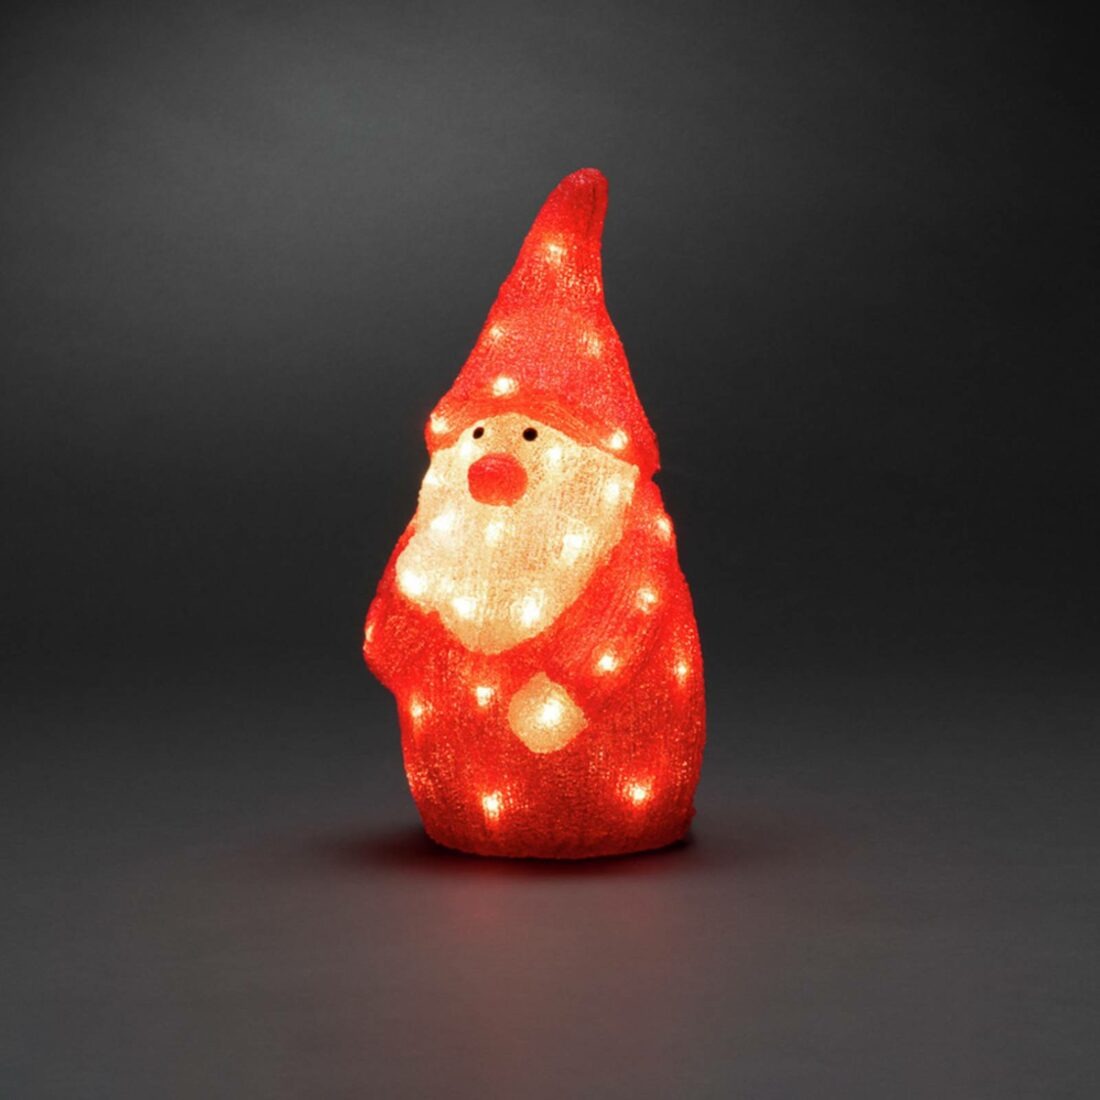 Konstsmide Christmas LED dekorace Santa Claus červená IP44 výška 38 cm